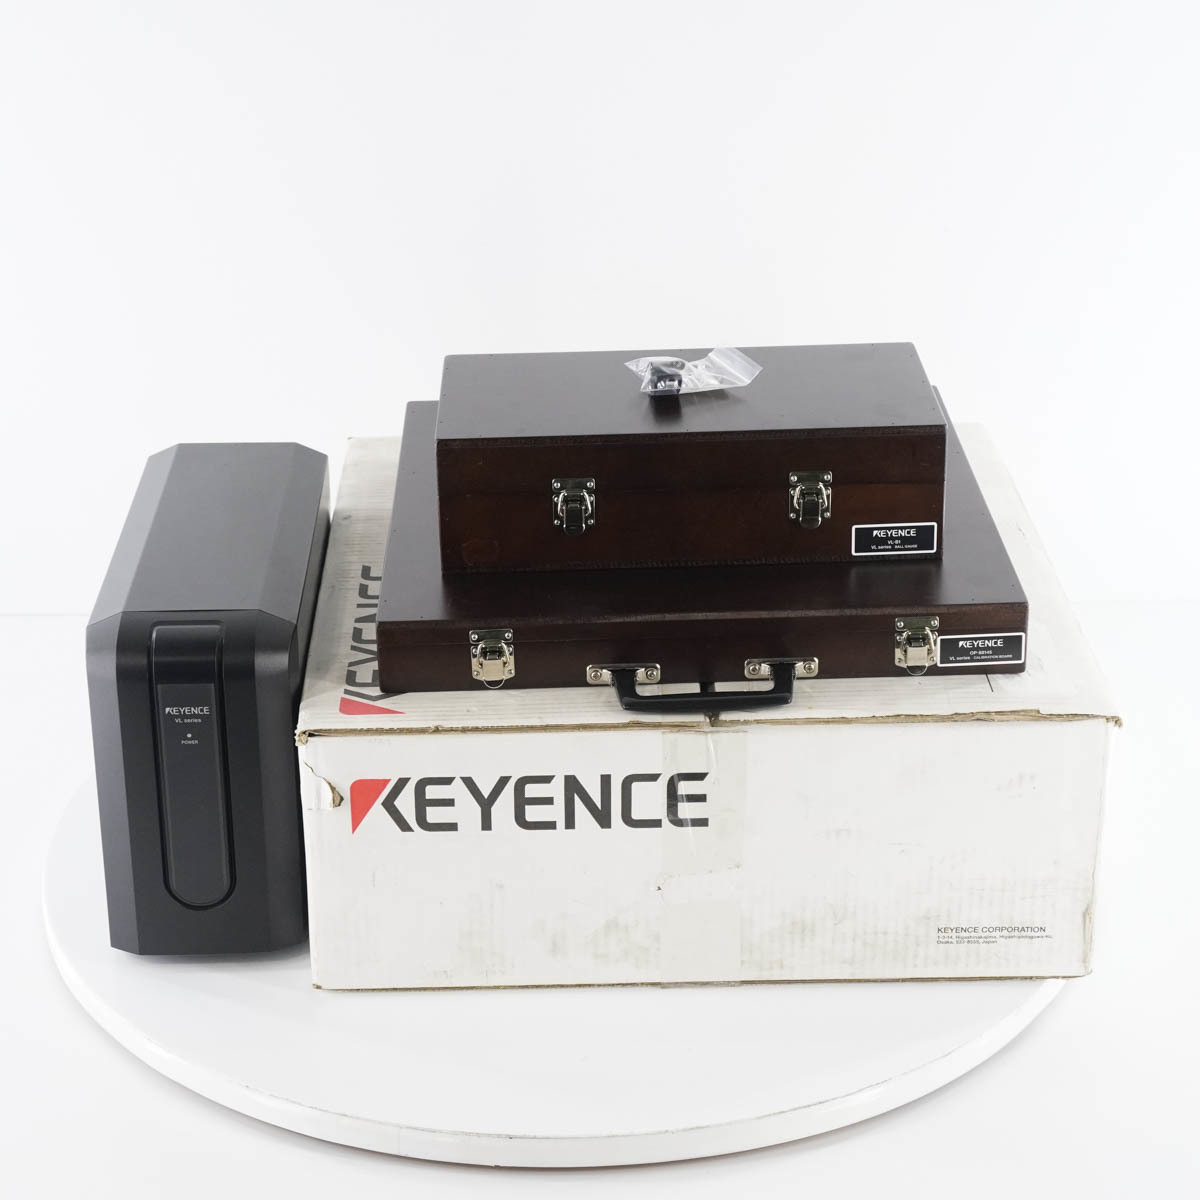 [DW] 8日保証 VL-320 KEYENCE VL-B1 OP-88145 キーエンス 3Dスキャナー型 三次元測定機 ヘッドコアシステム 電源コード ソ ...[05379-0002]_画像9